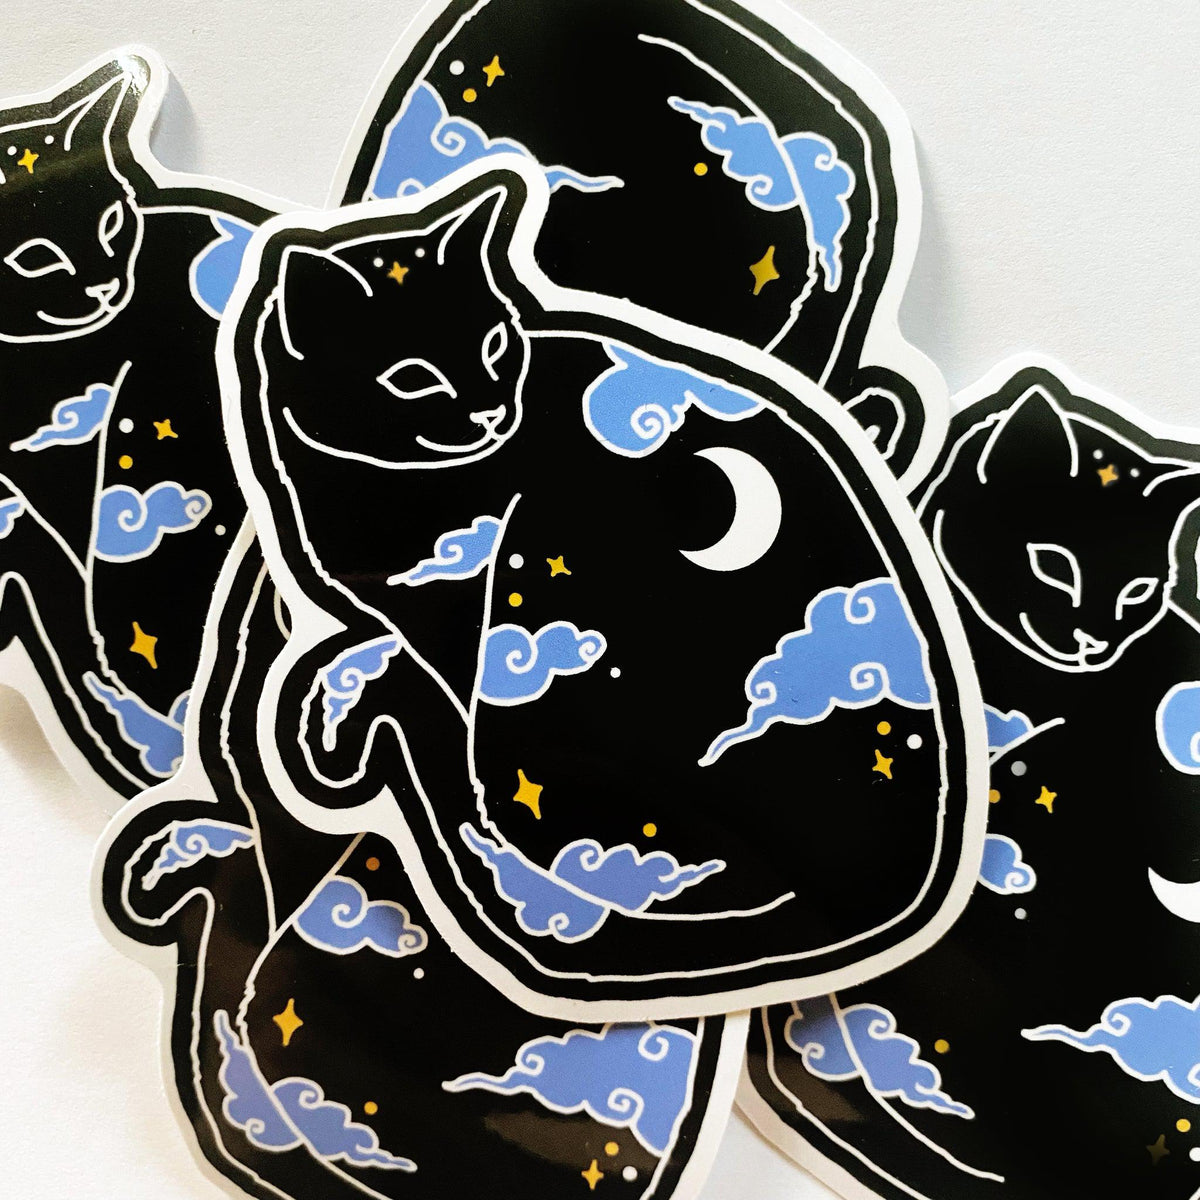 Celestial Black Cat Decal Vinyl Sticker